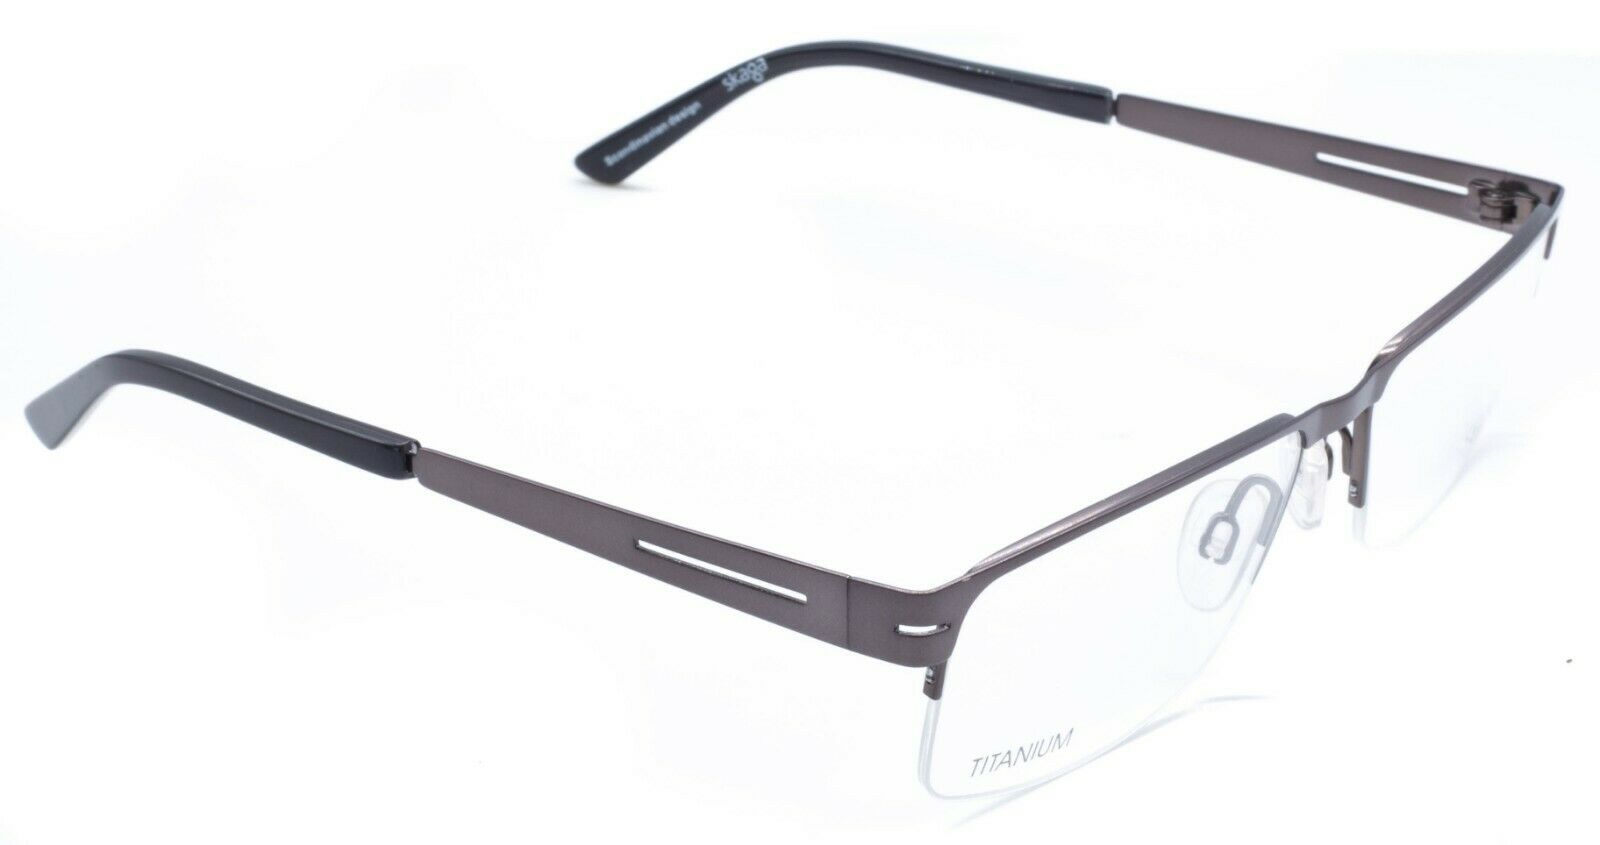 SKAGA SWEDEN 3750 Tomas 5509 55mm Glasses RX Optical Eyeglasses Eyewear - New